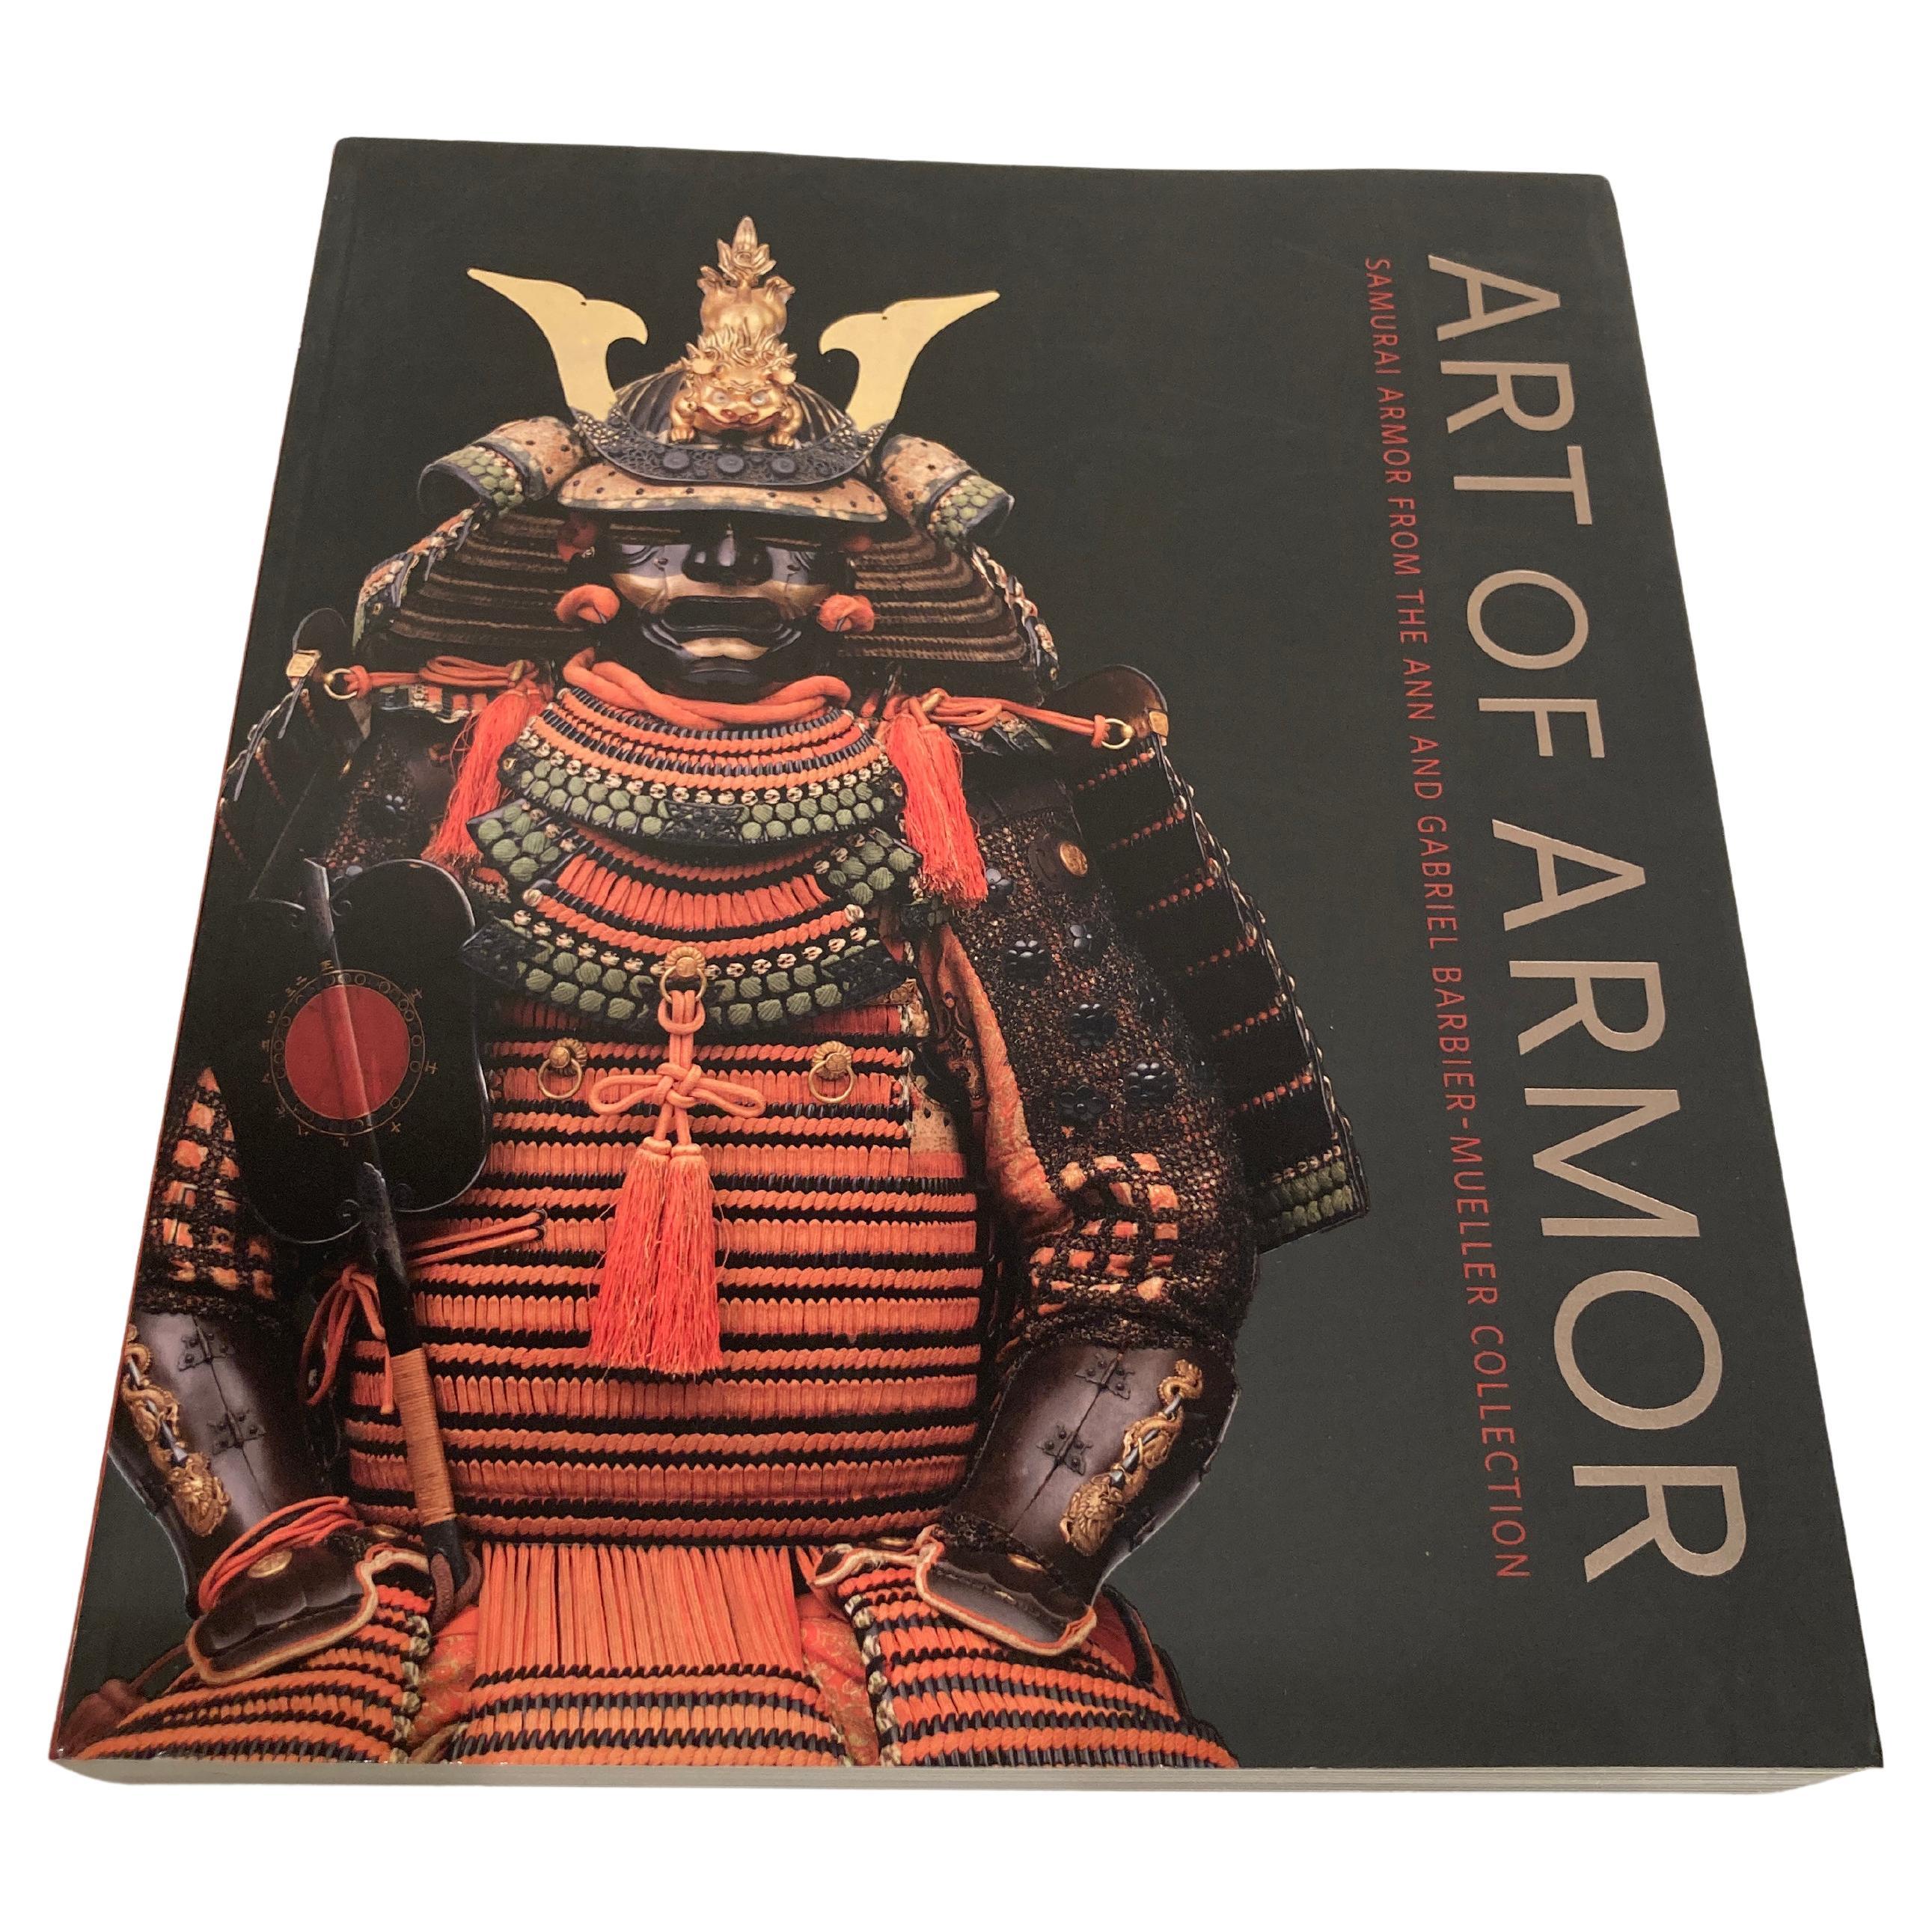 Art of Armor: Samurai Armor from the Ann and Gabriel Barbier-Mueller Collection.
Morihiro Ogawa
